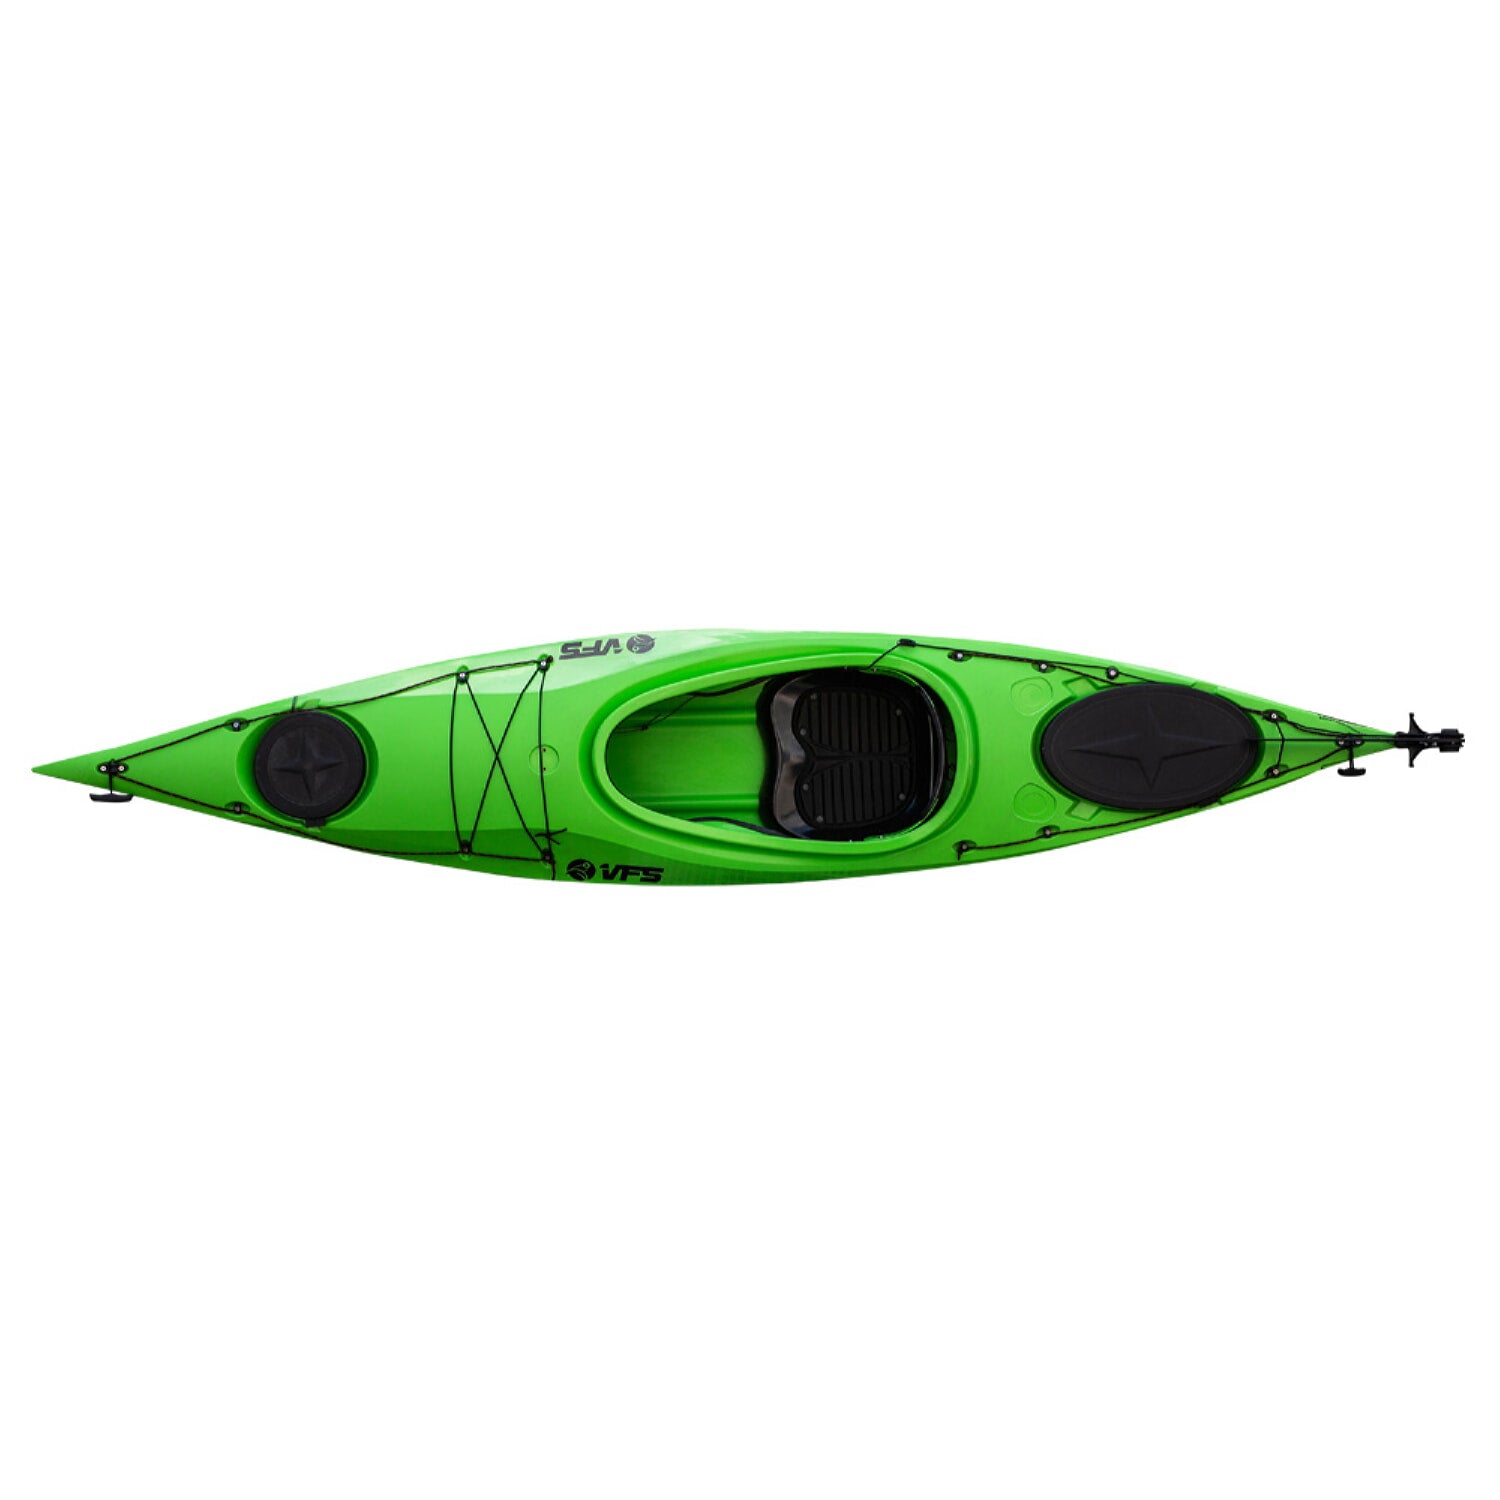 Kayak Taboga (3300Mm) - Green